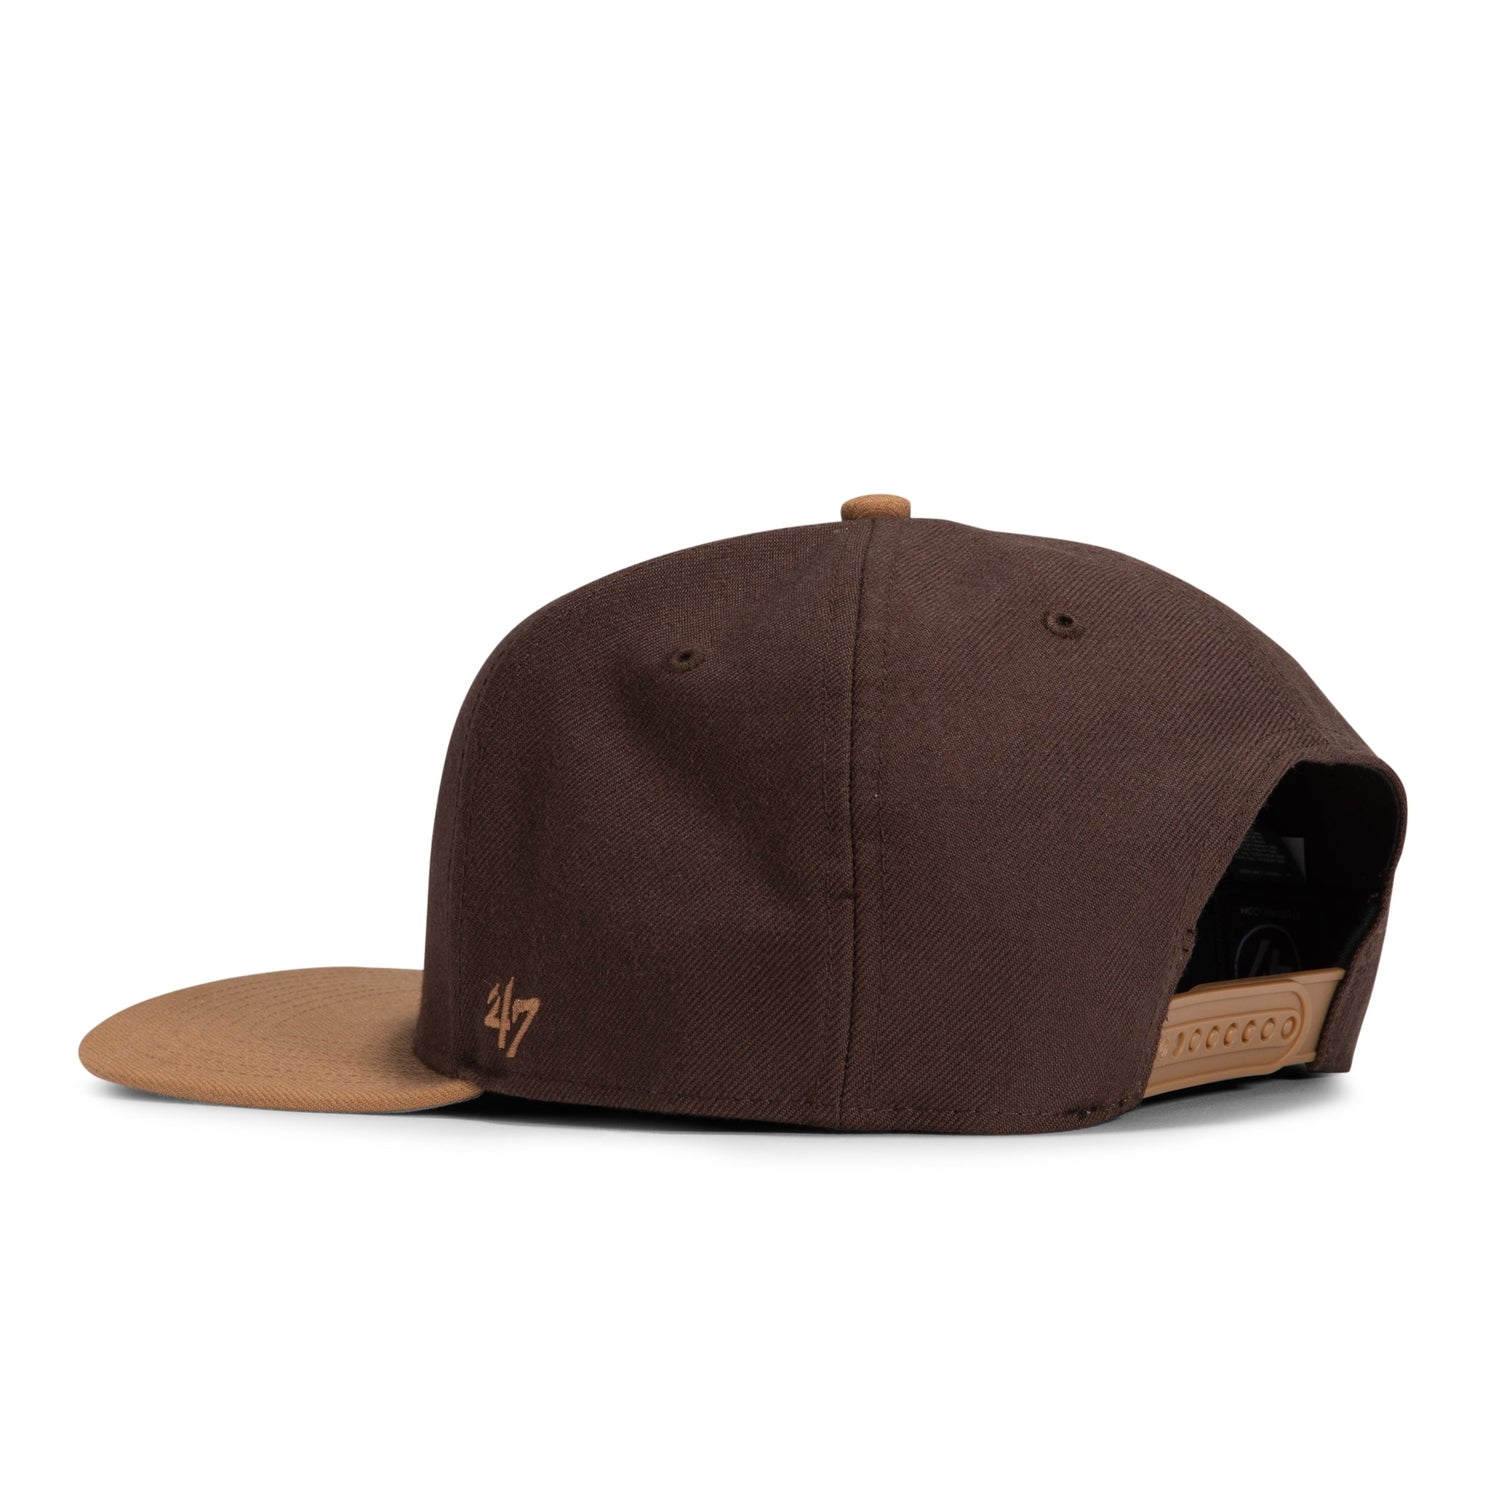 https://www.hatclubs.shop/wp-content/uploads/1687/09/explore-a-world-of-endless-possibilities-47-brand-brooklyn-nets-captain-snapback-hat-brown-khaki-47-brand_1.jpg